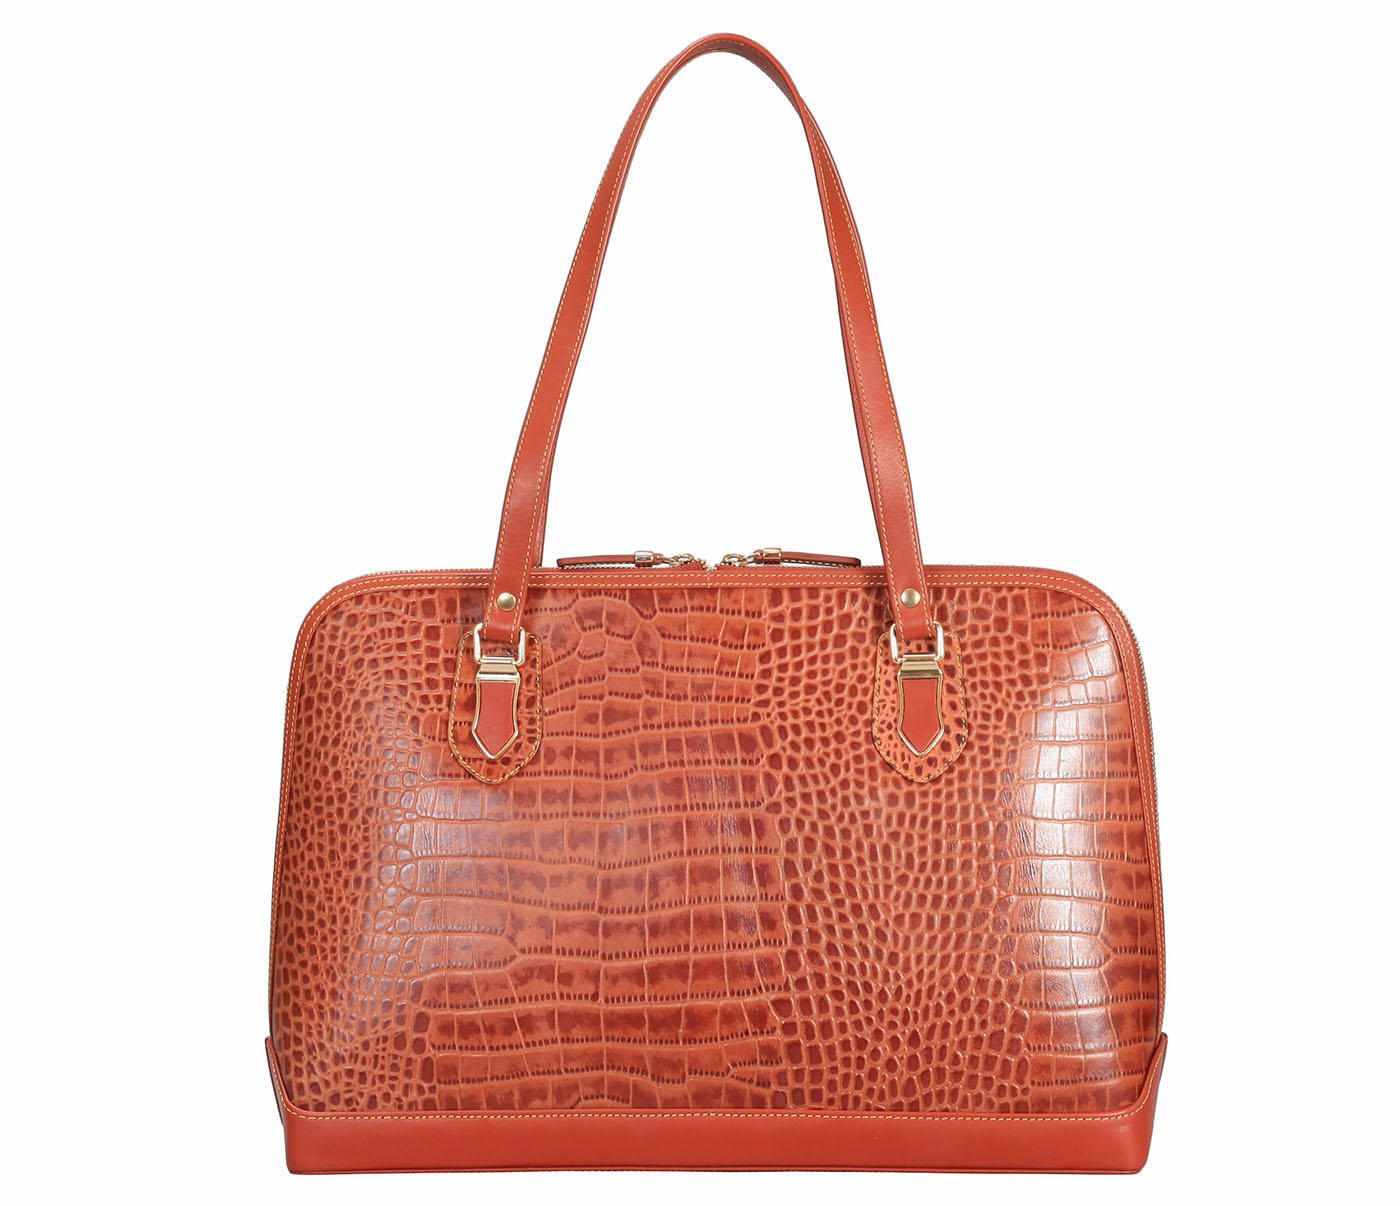 B858-Estrella-Shoulder Work Bag in Genuine Leather - Tan